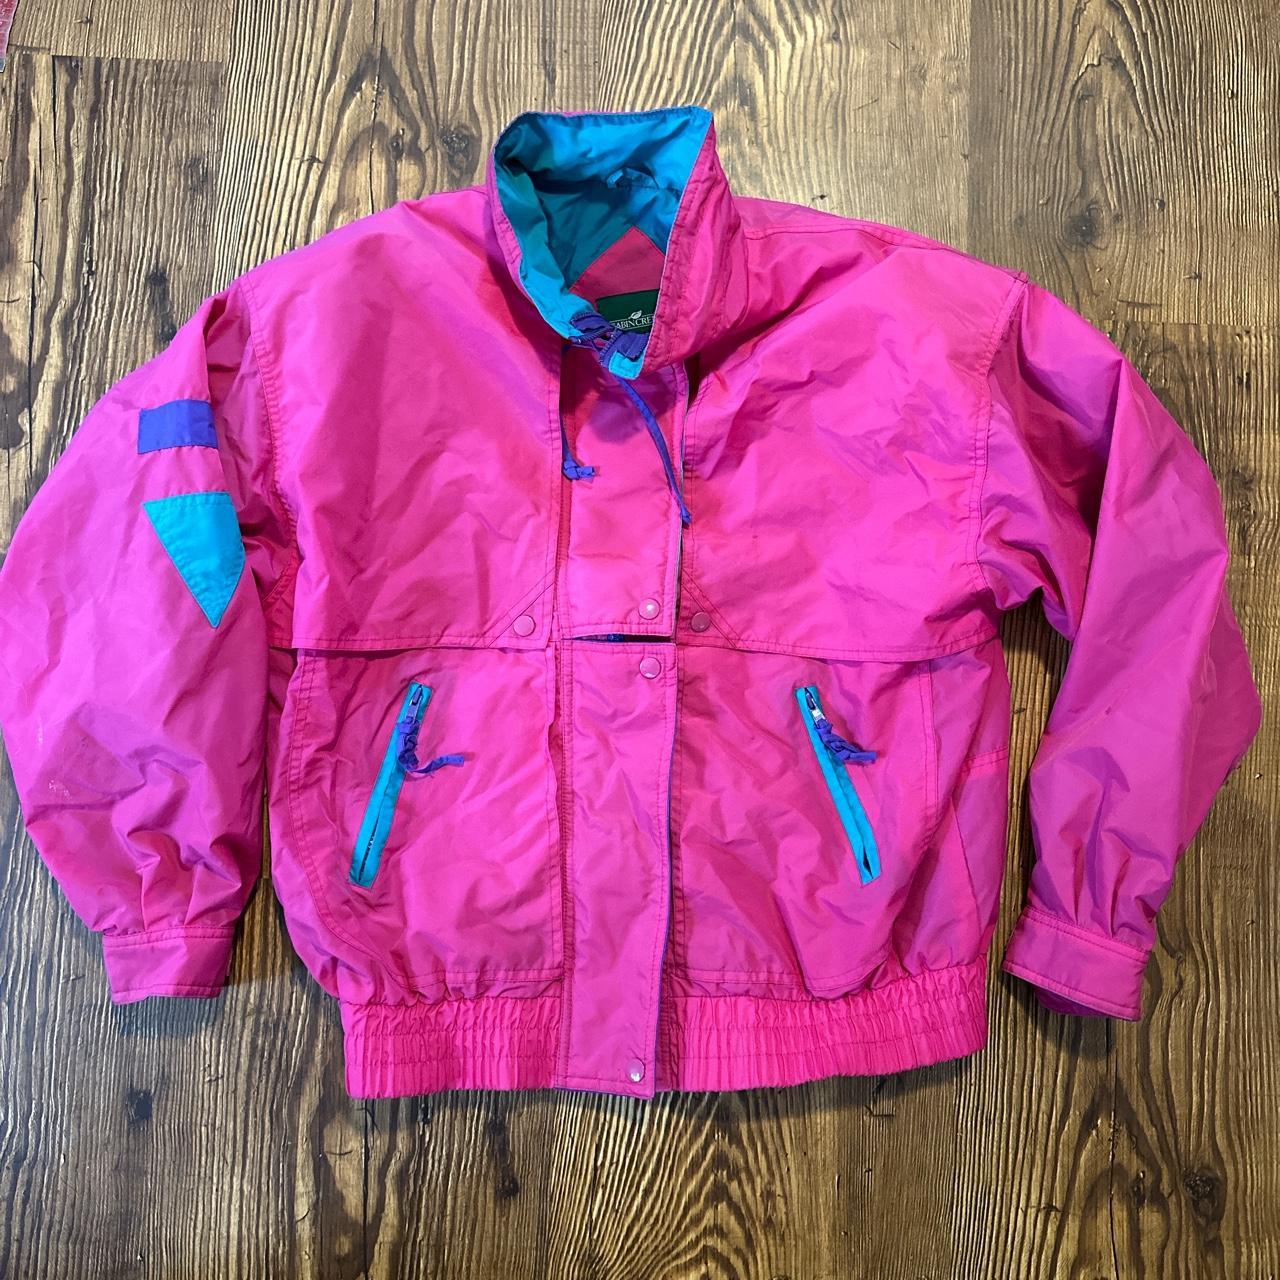 Vintage 80s ski jacket colorblock pink turquoise ski... - Depop